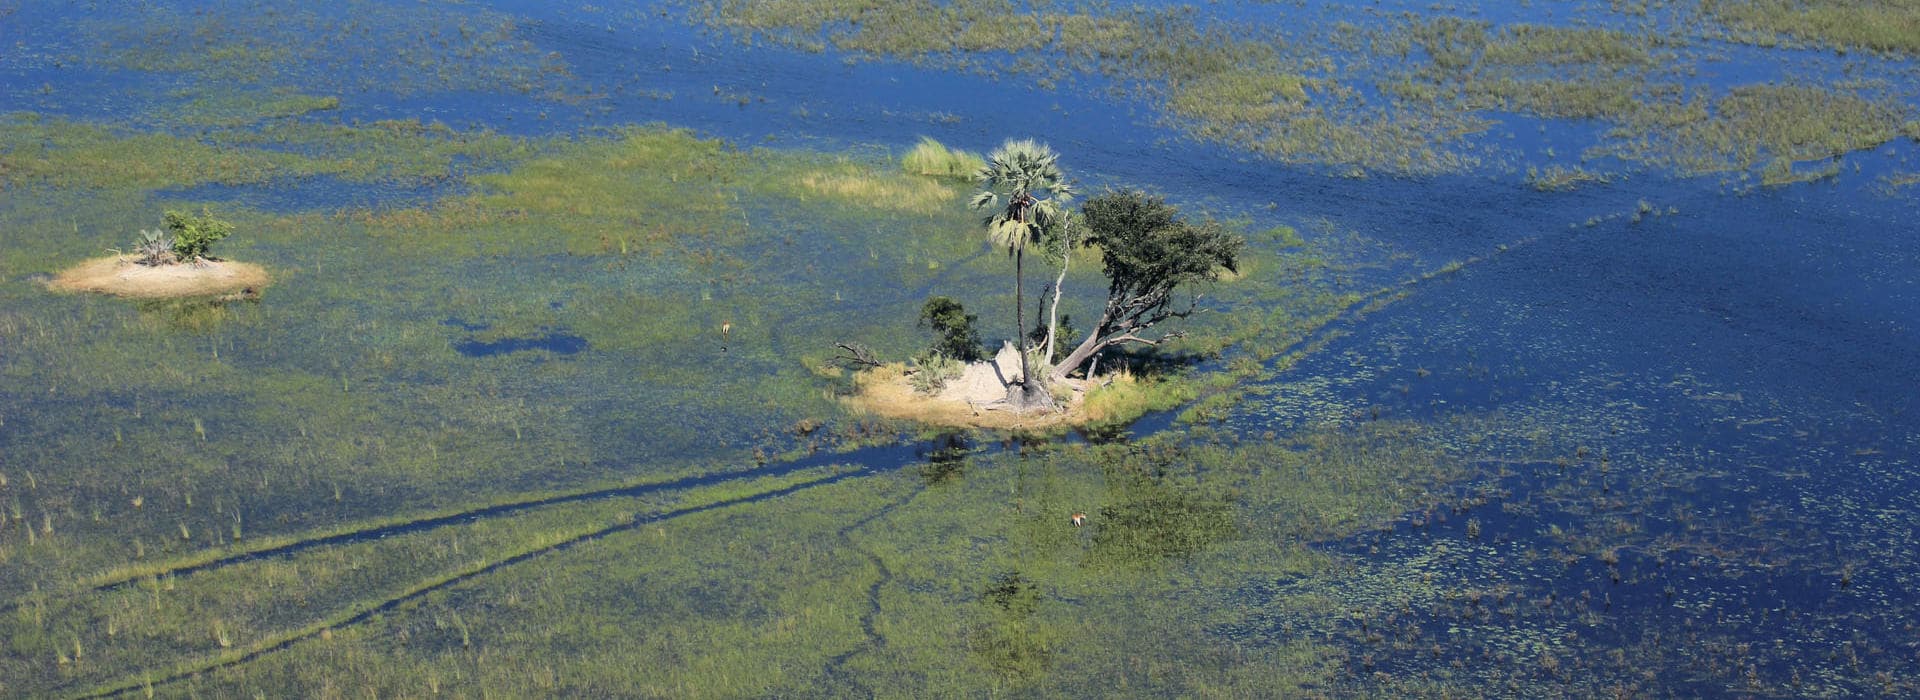 Botswana Reisen ins Okavango Delta